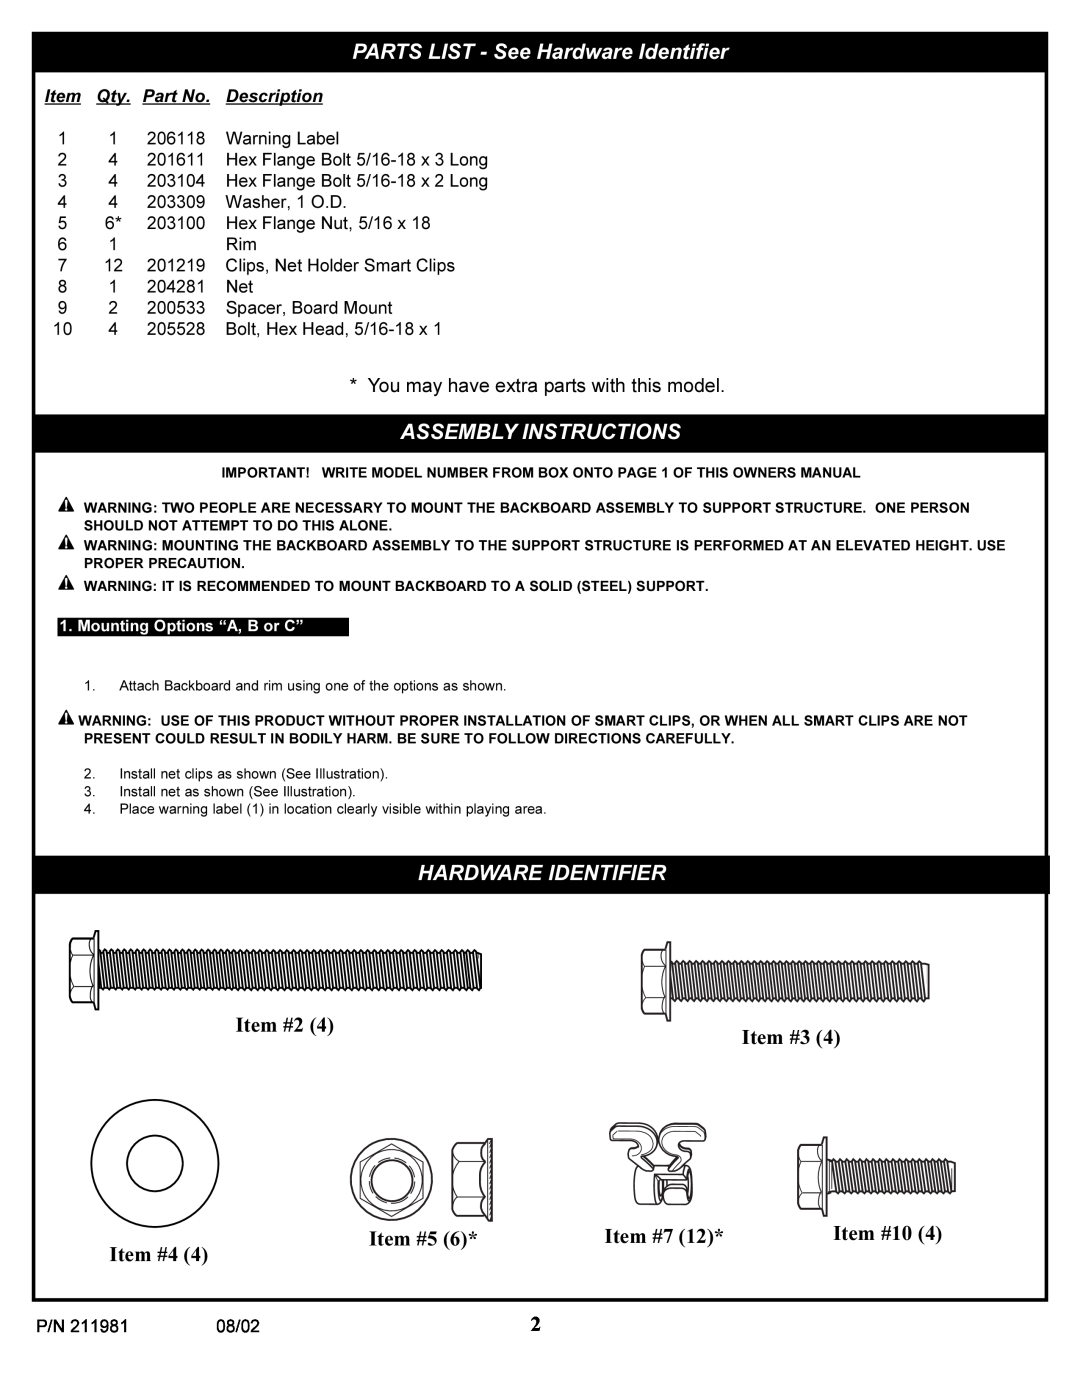 Huffy 2002 manual PARTS LIST - See Hardware Identifier, Assembly Instructions, Item #2, Item #3, Item #4, Item #5, Item #7 